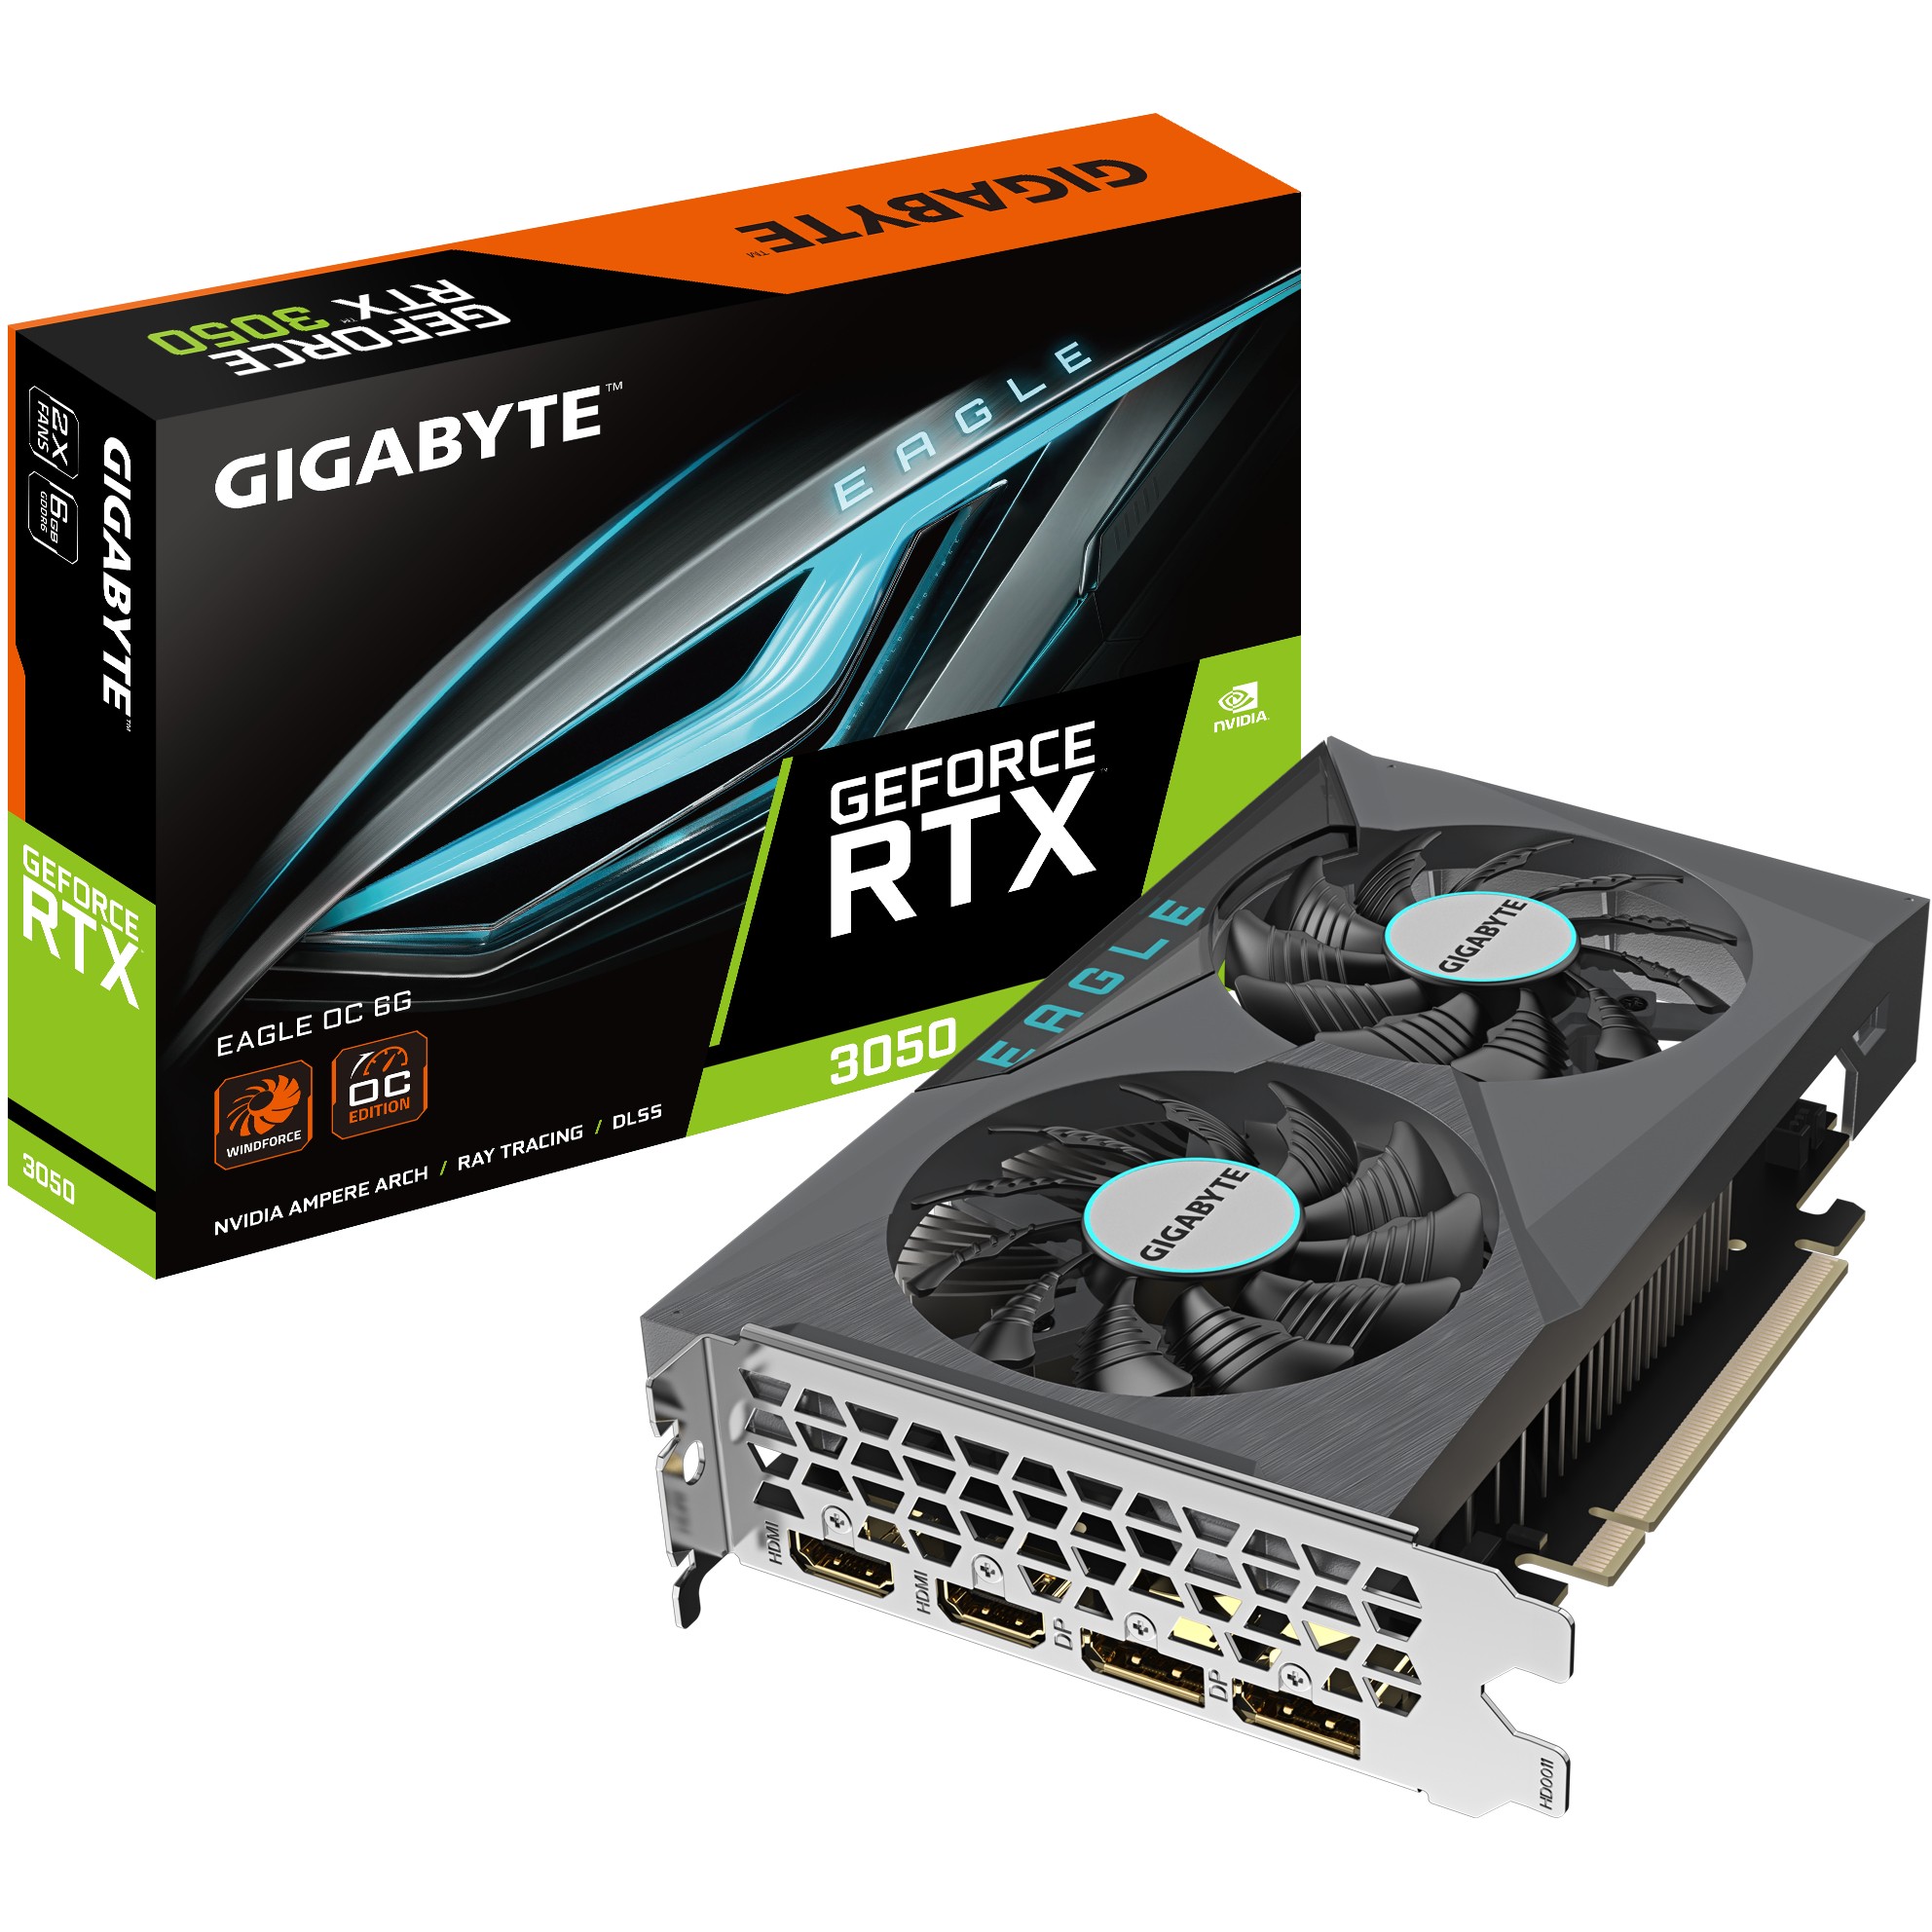 GIGABYTE GeForce RTX 3050 Eagle OC 6GB